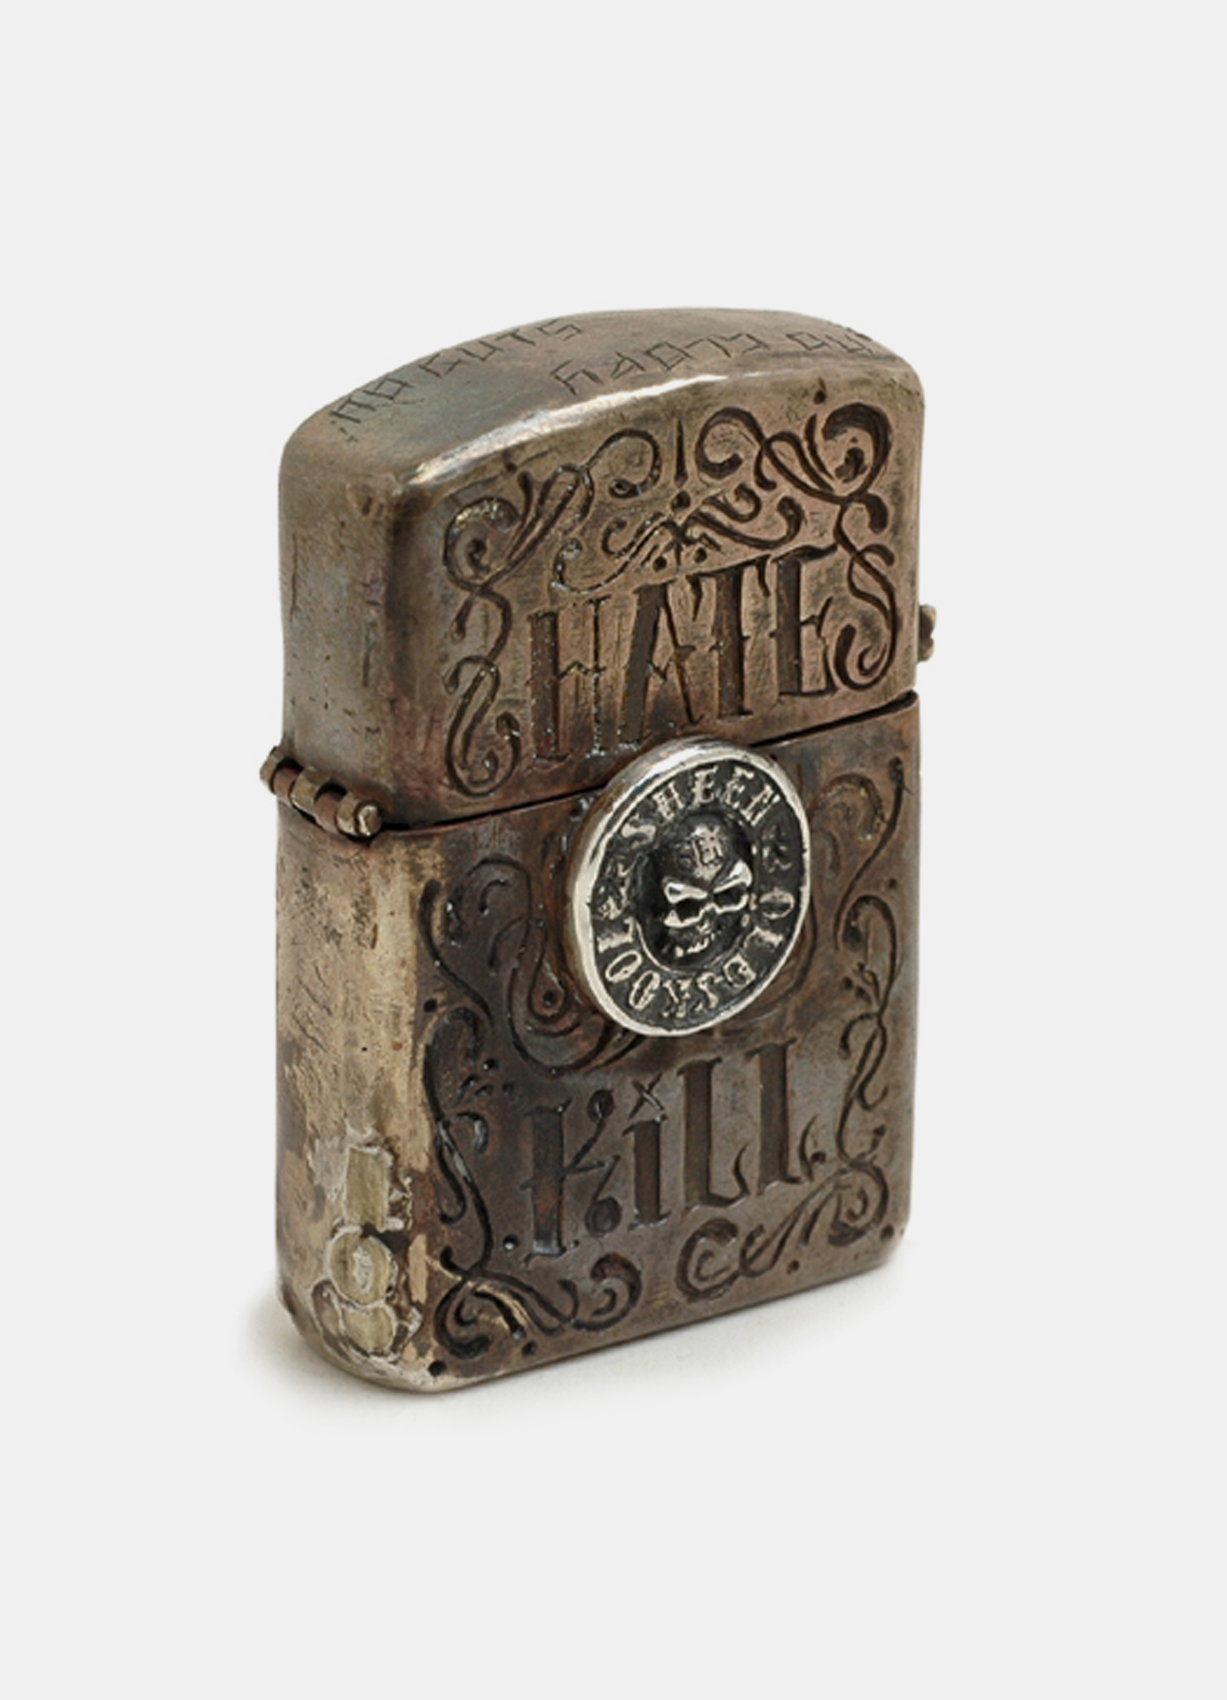 Hate&amp;Kill Brass Zippo Lighter Case Vintage Special